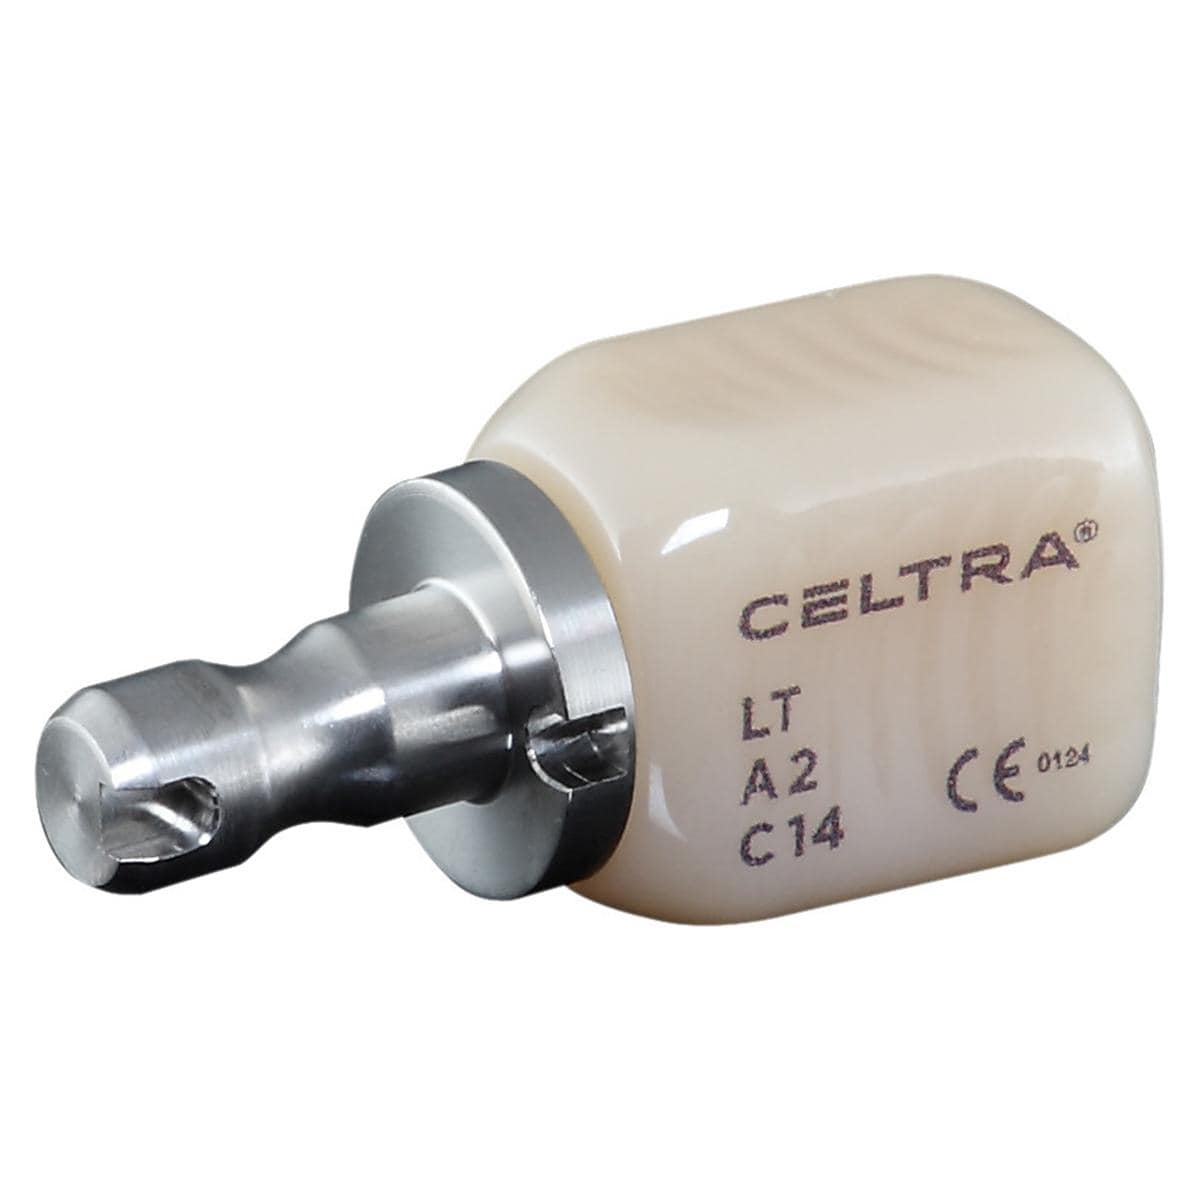 CELTRA® DUO LT - Nachfüllpackung - A2, Größe C14, Packung 4 Stück